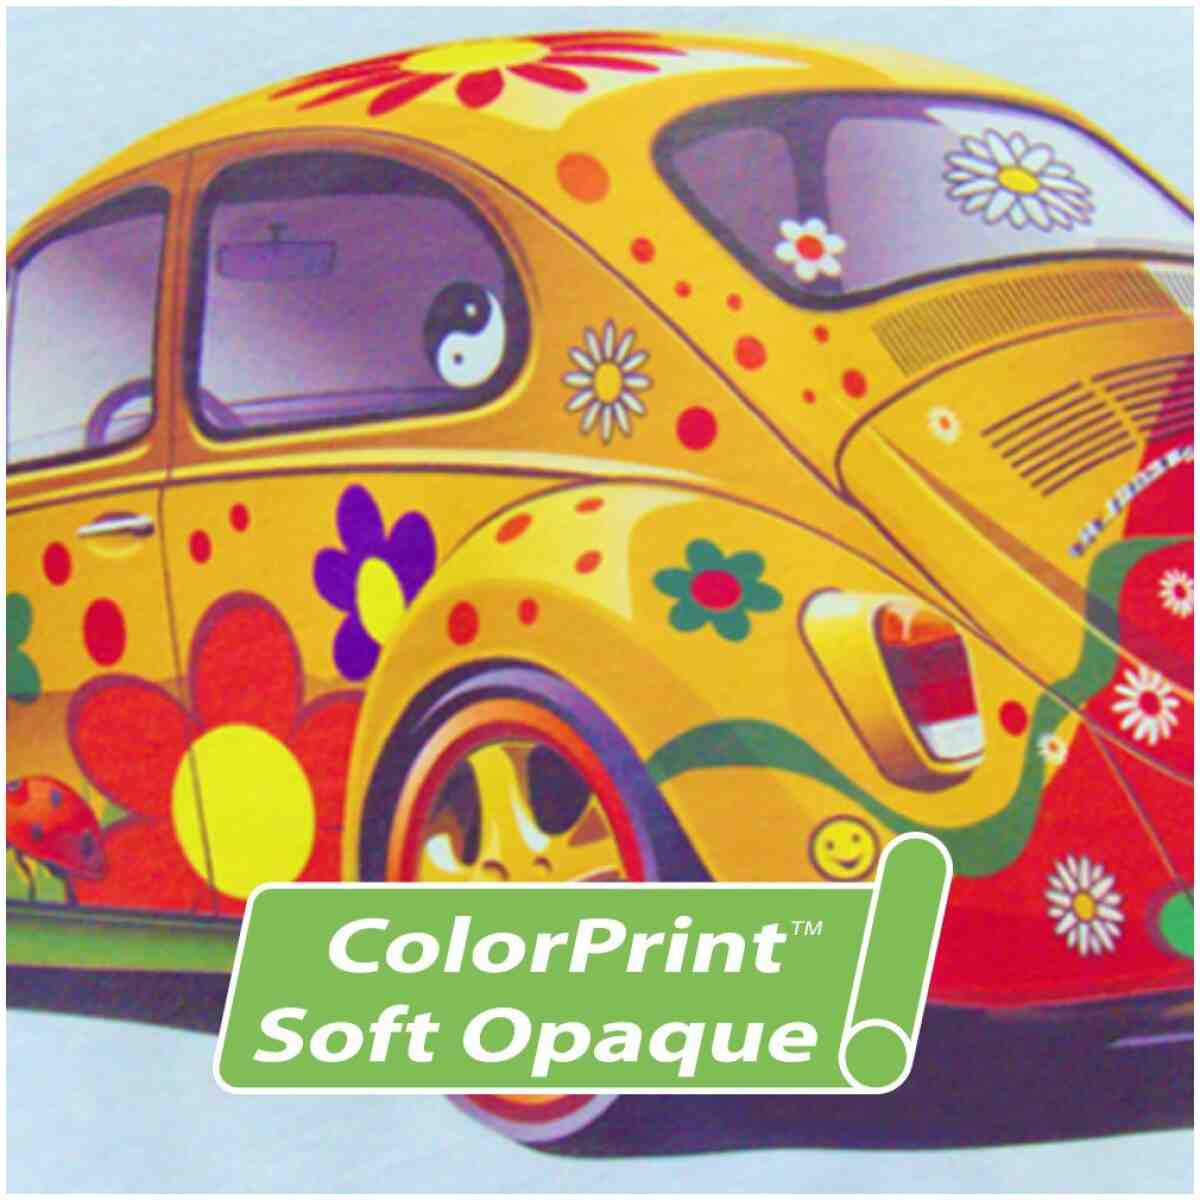 Colorprint™ Soft Opaque Print & Cut Digital Media (Htv) 29.5" SISER®